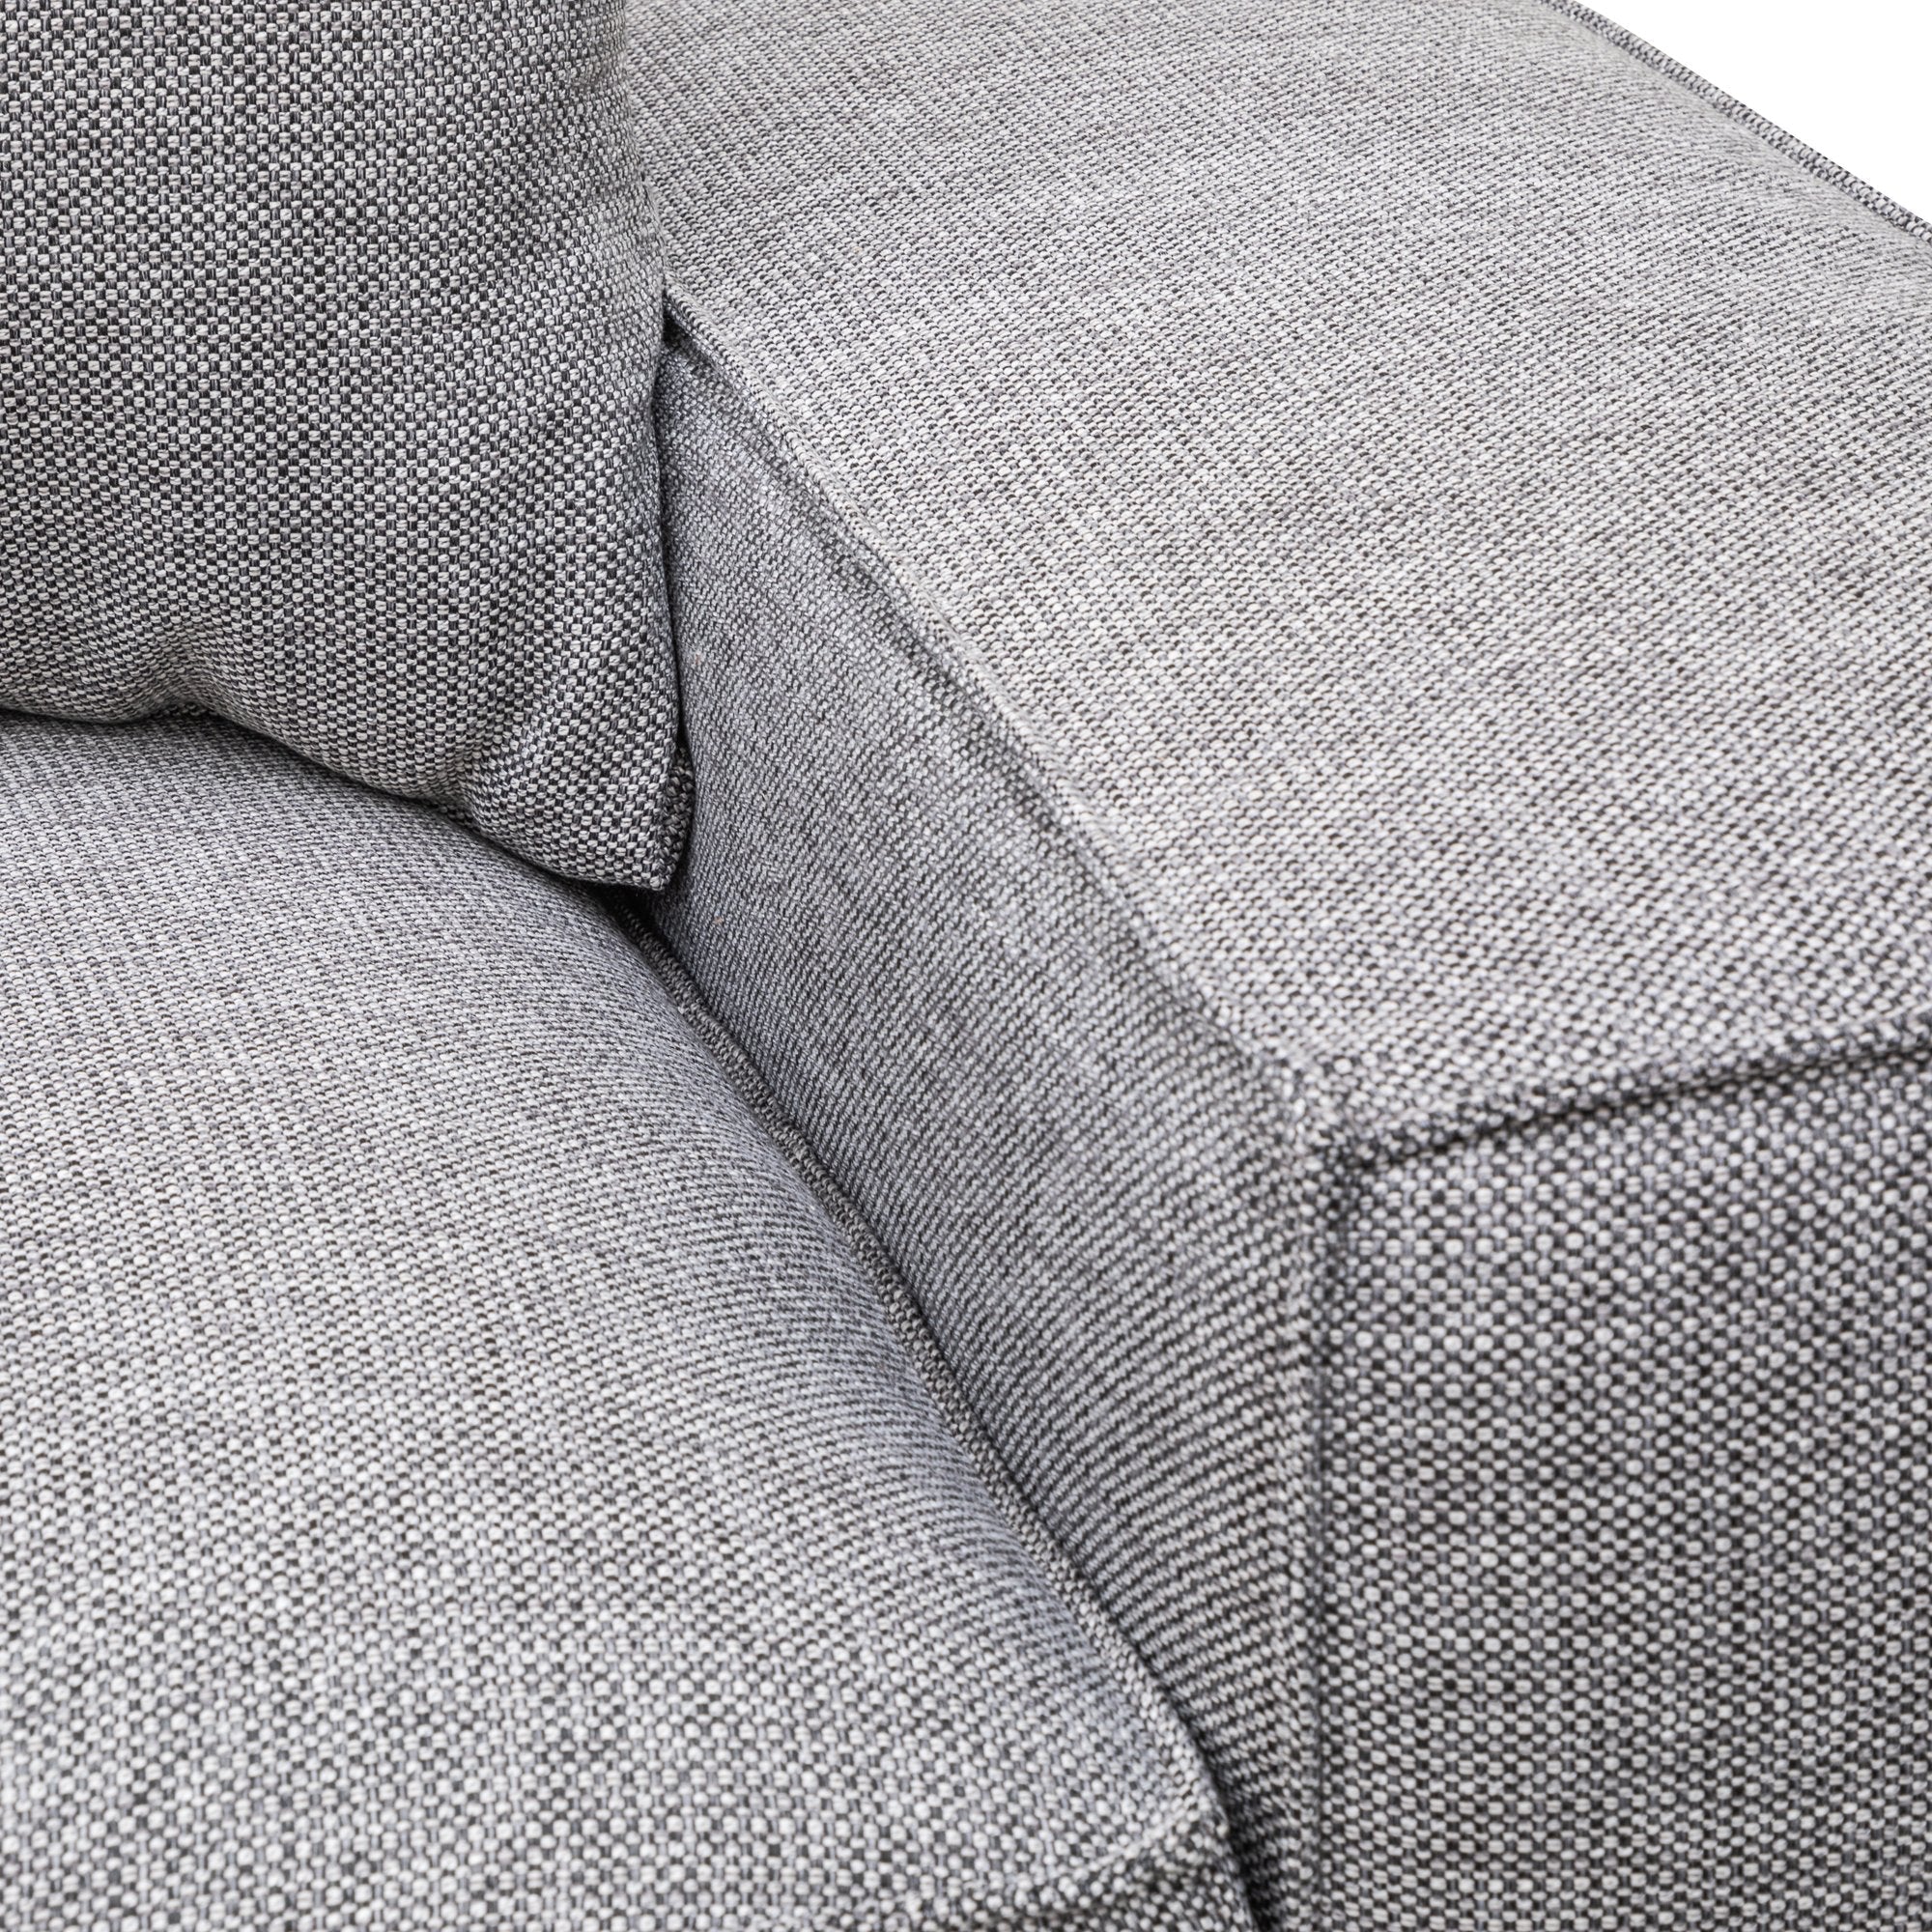 Charles 3S Left Chaise Sofa - Graphite Grey - Sofas